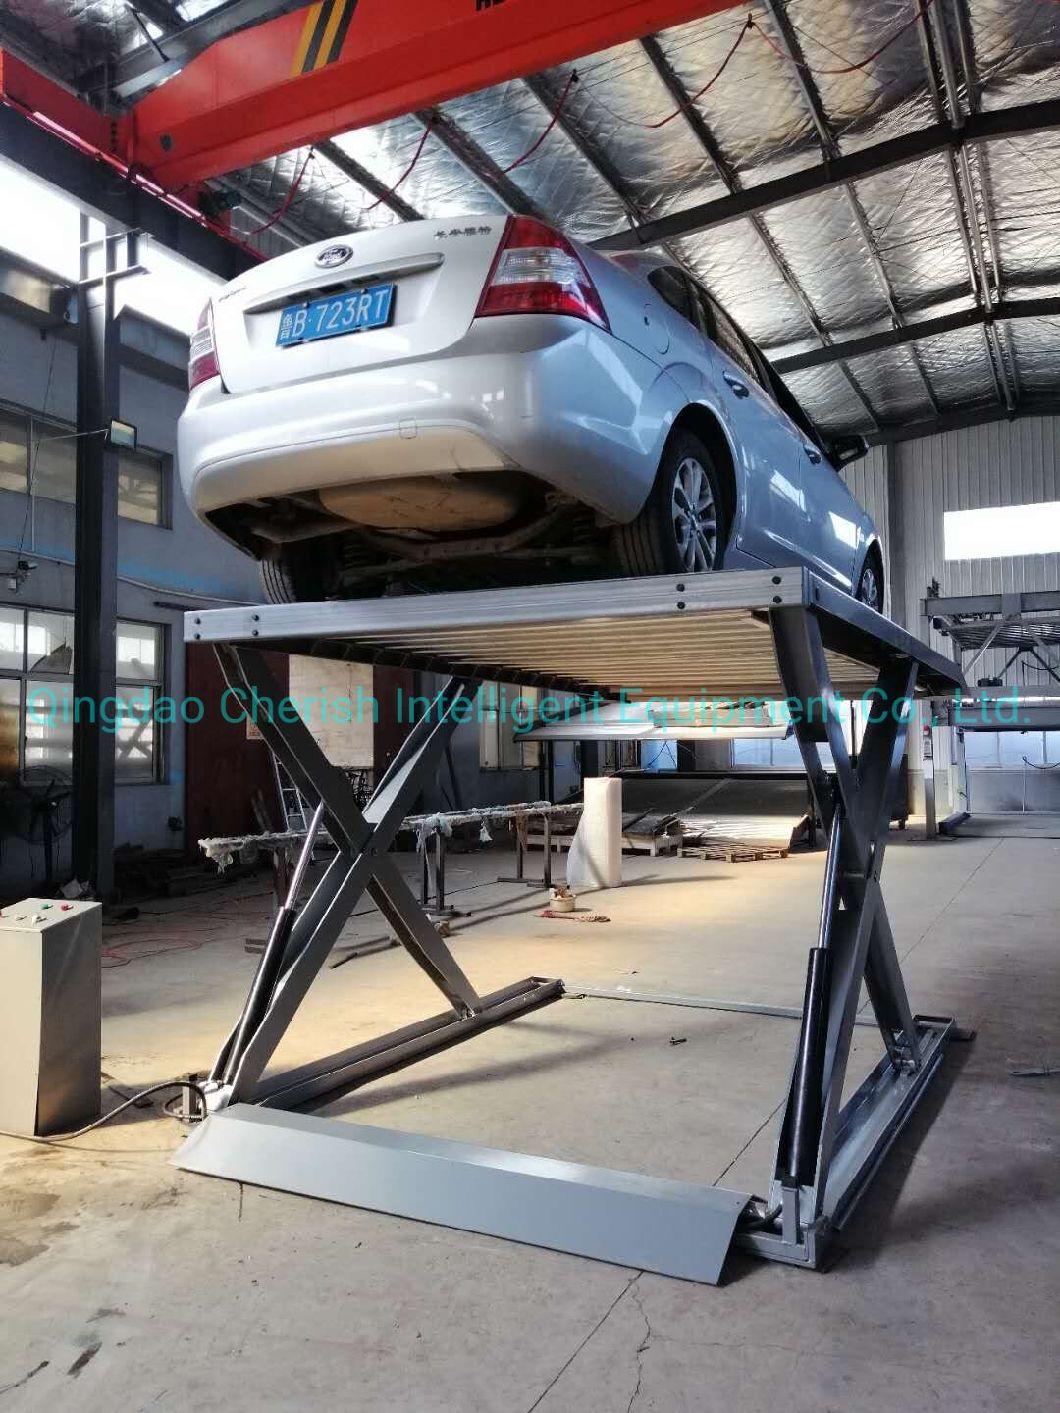 Home/Garage 2 Level Car Stacker Scissor Park Lift Hoist